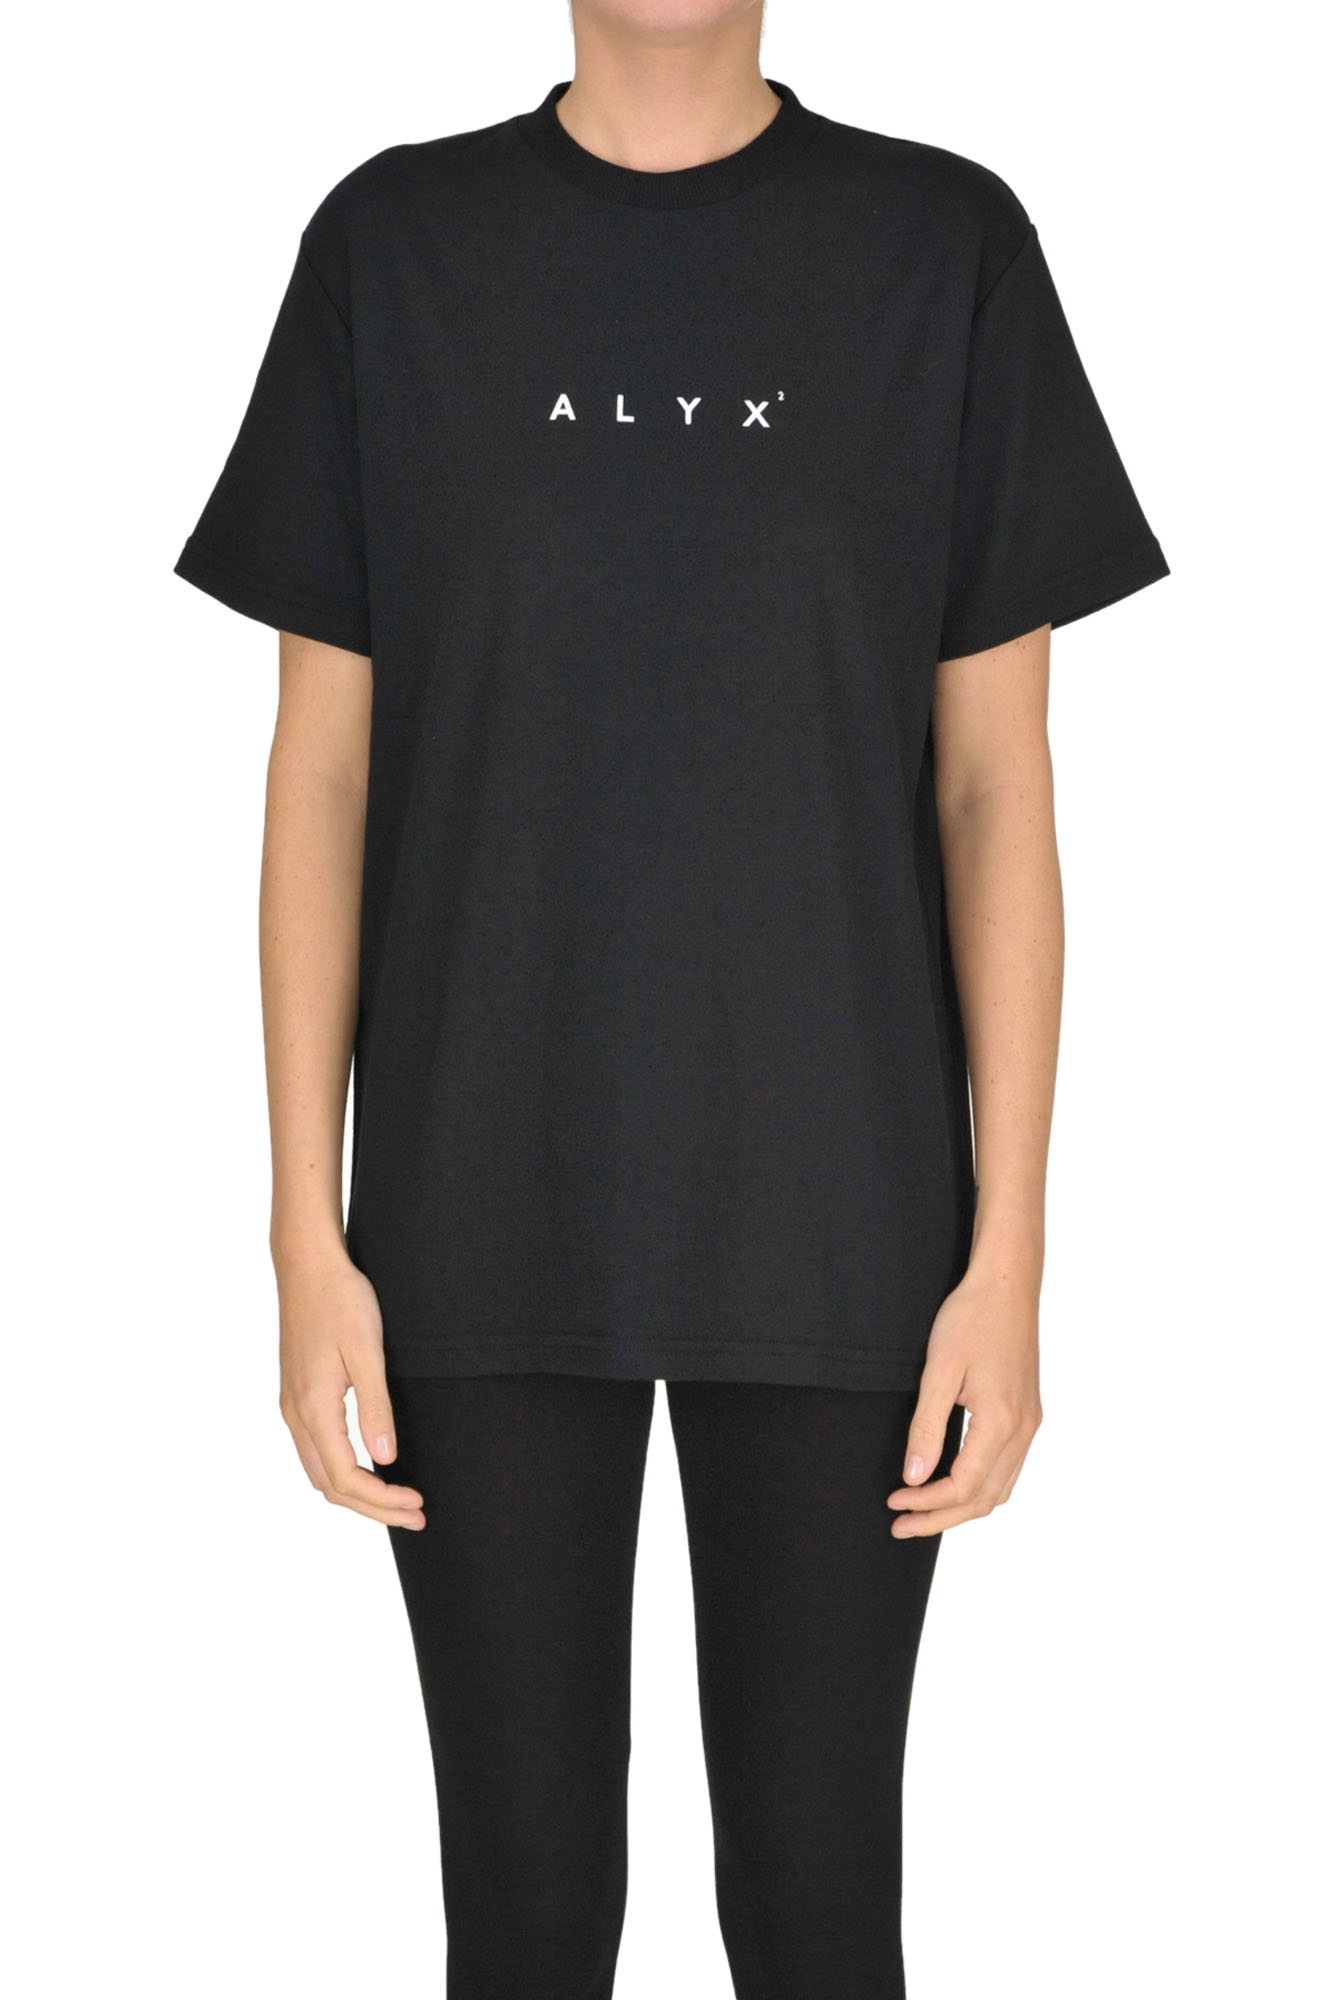 Alyx Visual Designer logo t-shirt - Buy online on Glamest.com - Glamest ...